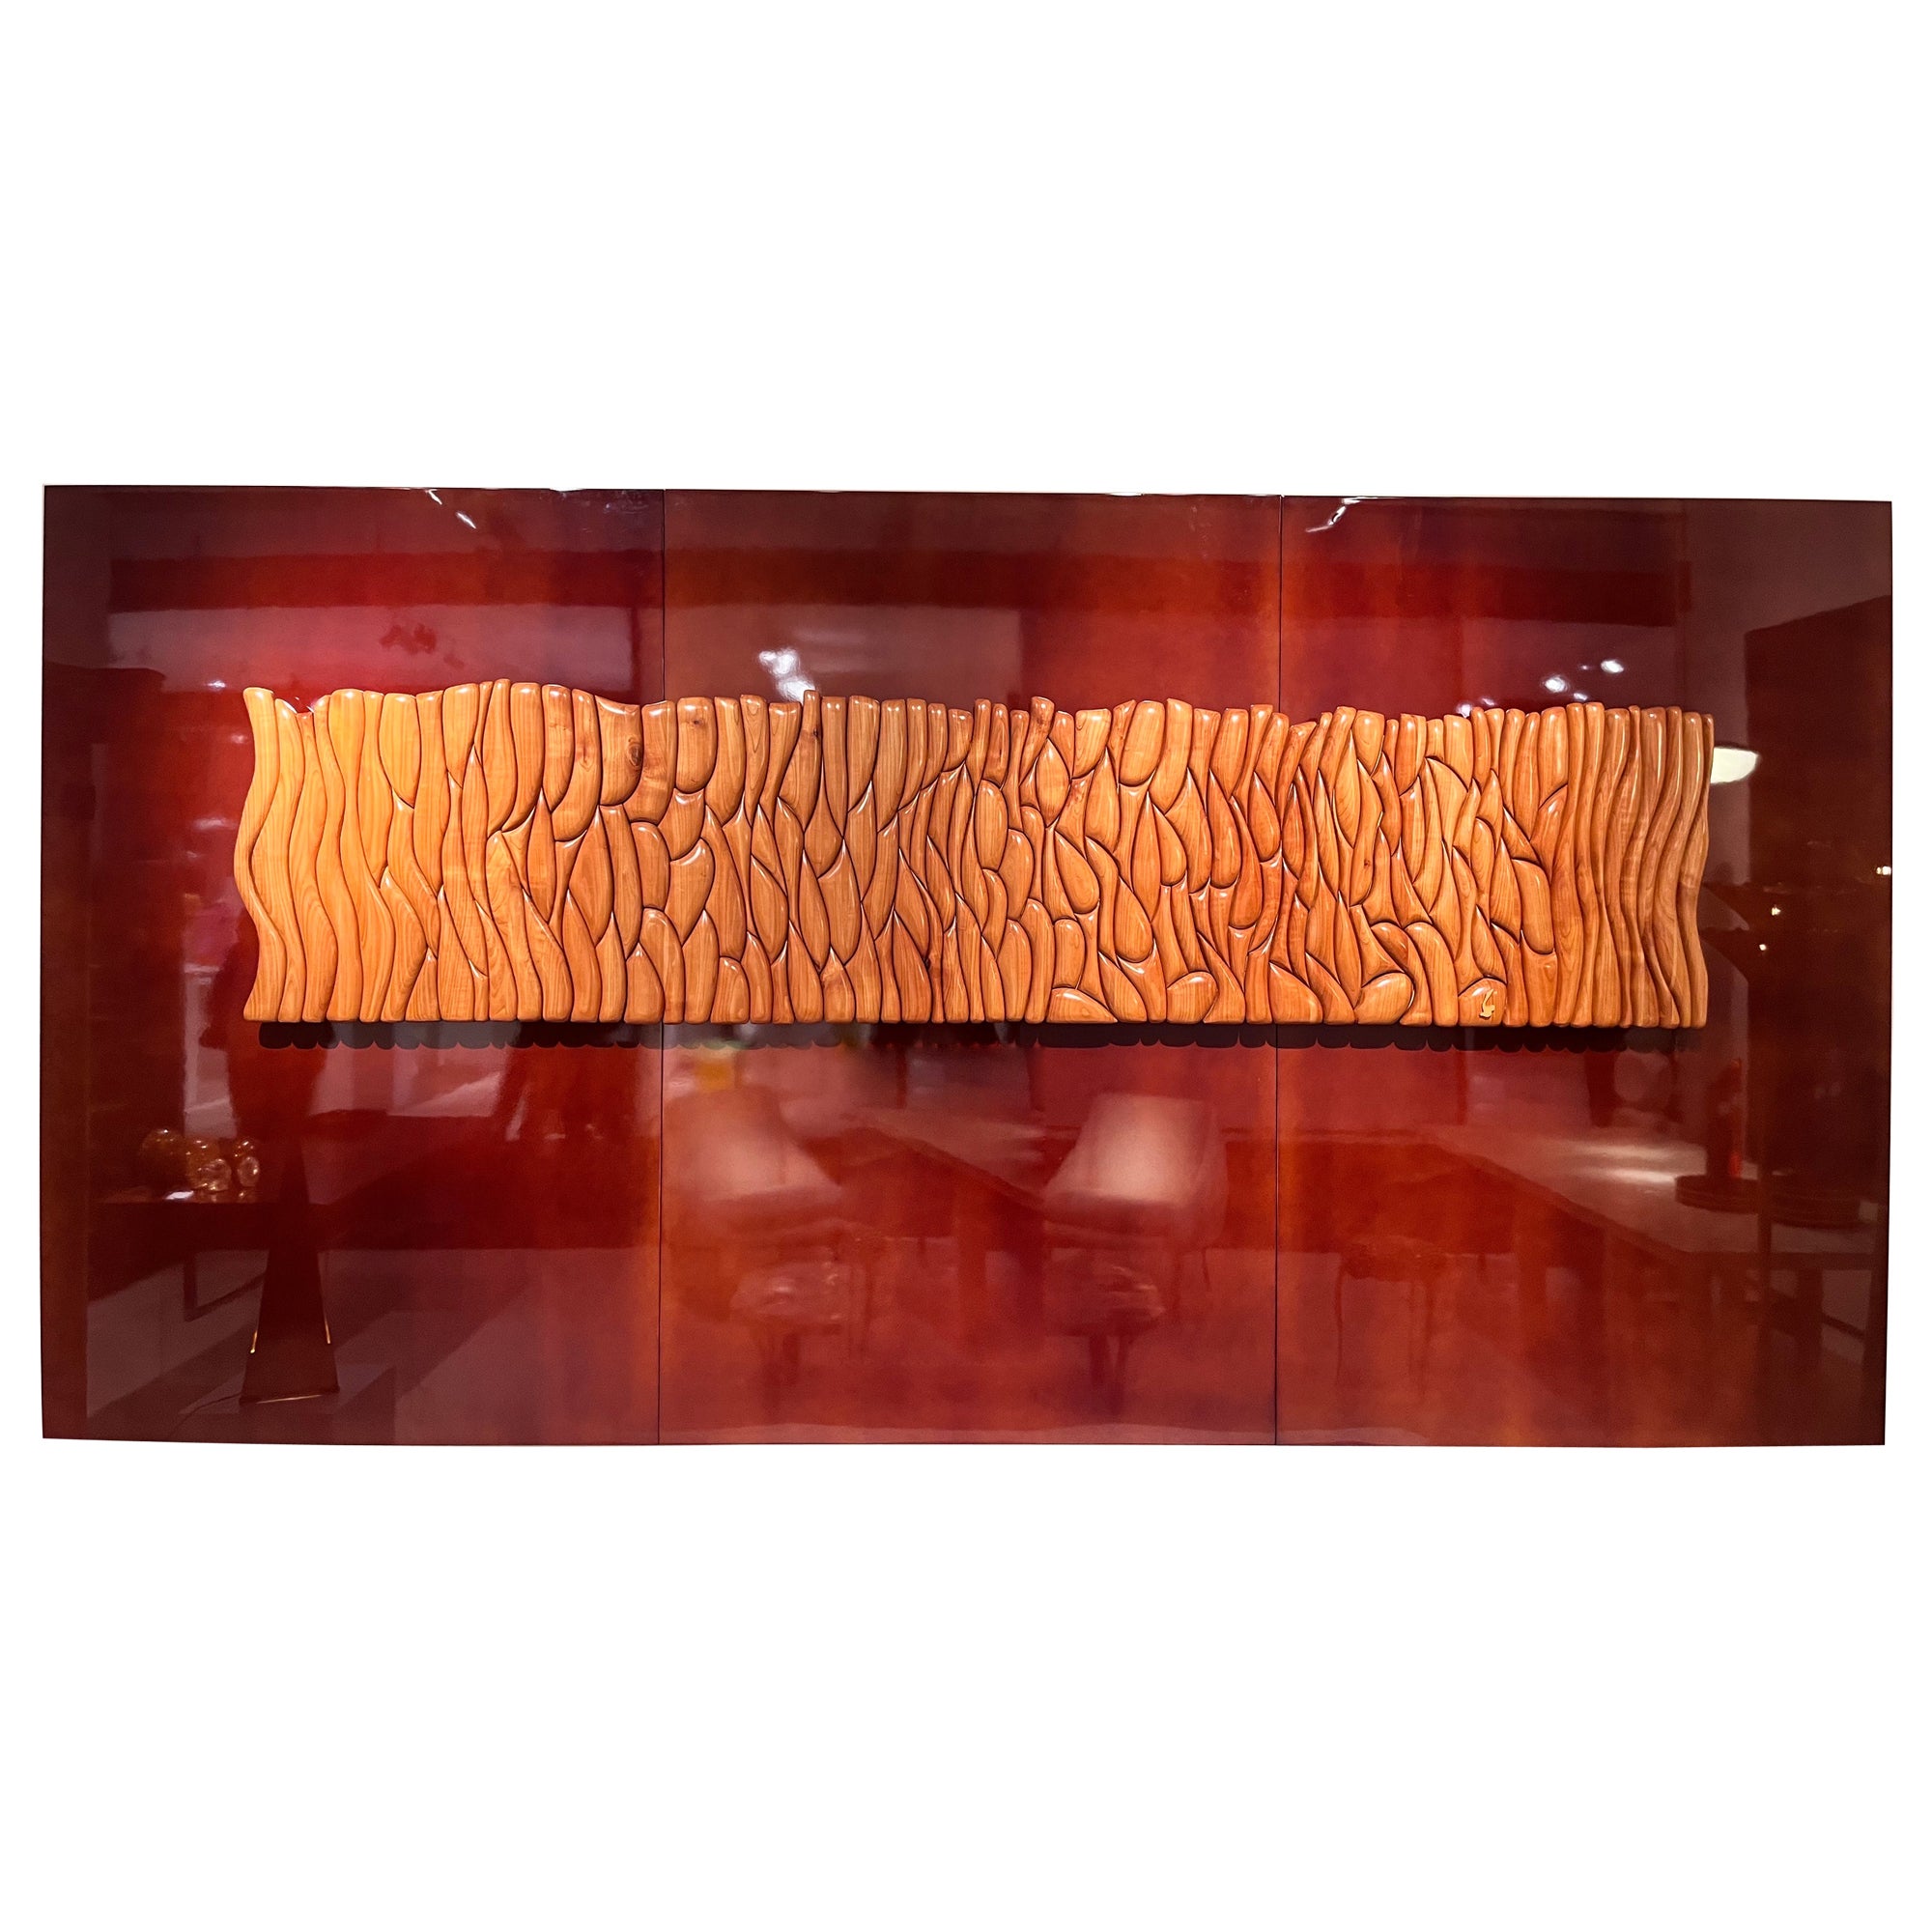 Solid ash wood sculpture panel on lacquered wood by Lucien Bénière